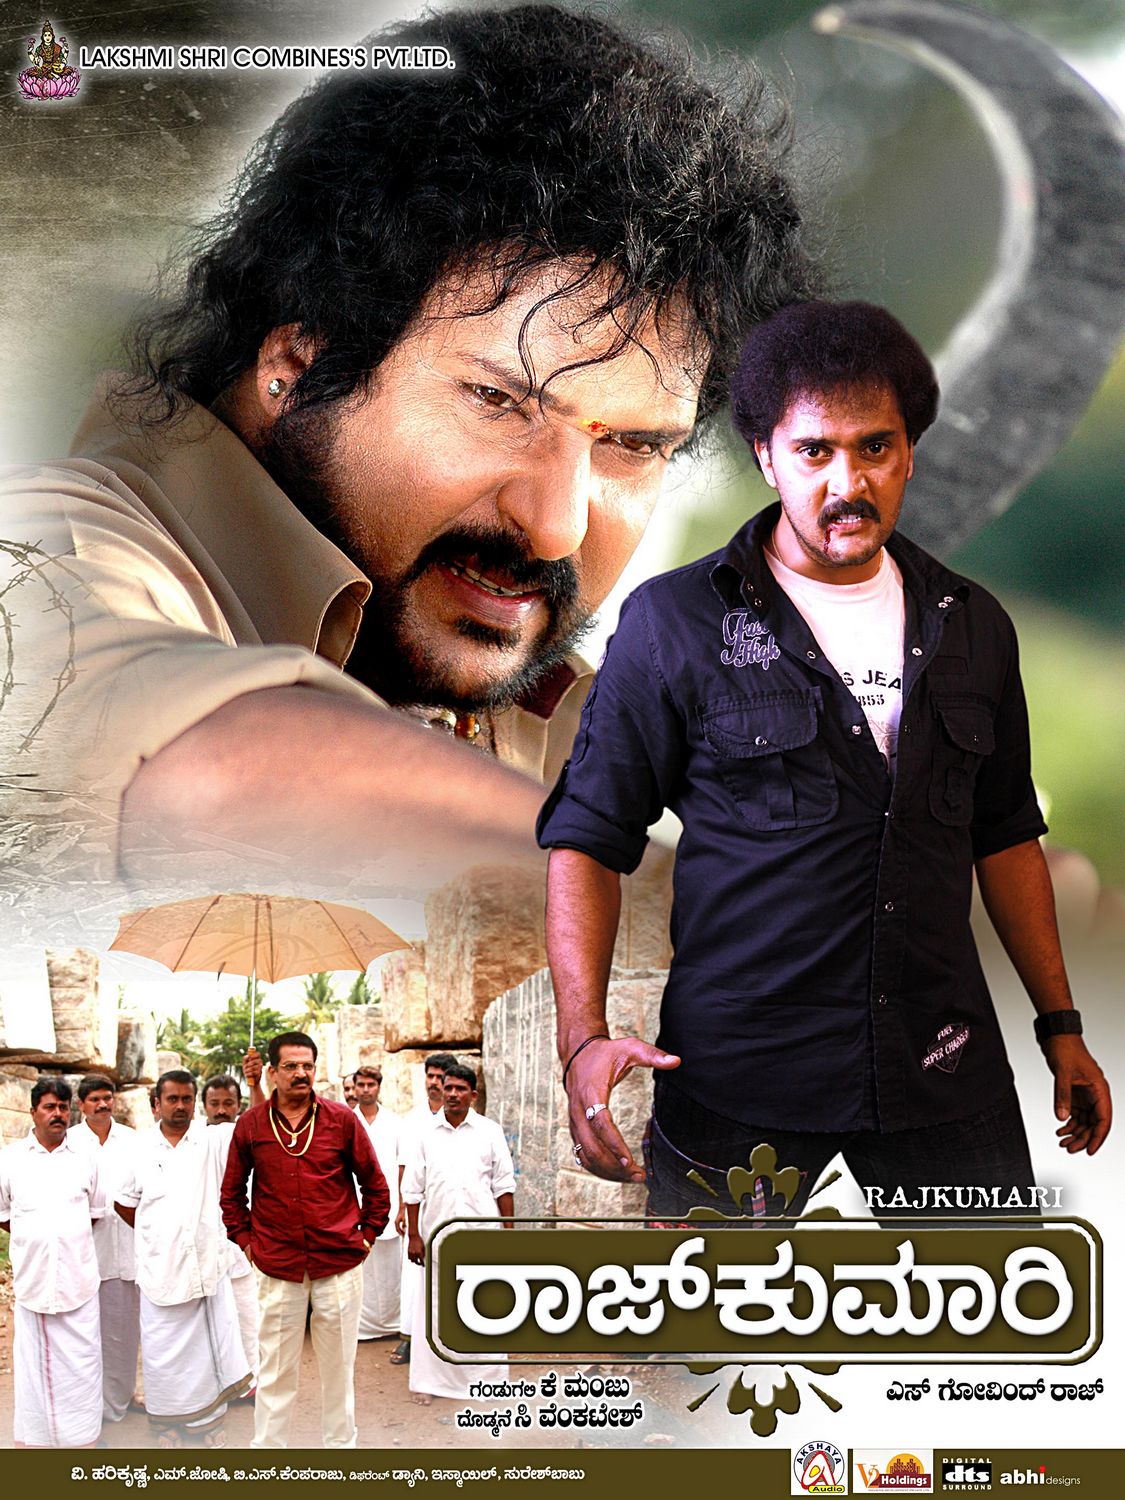 Extra Large Movie Poster Image for Rajkumari (#12 of 20)